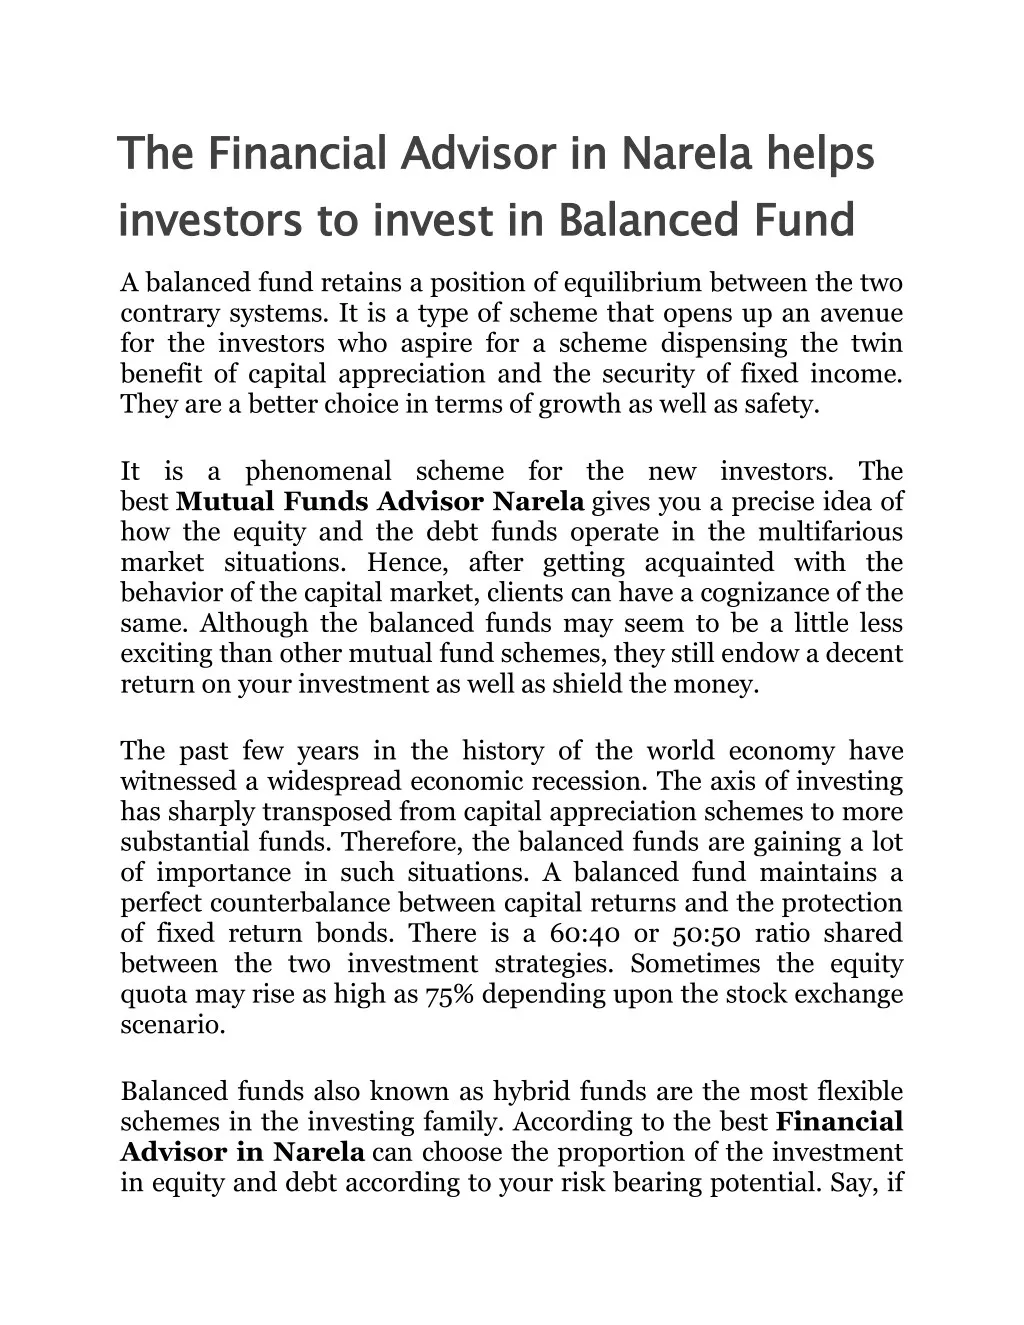 the financial advisor in narela helps investors